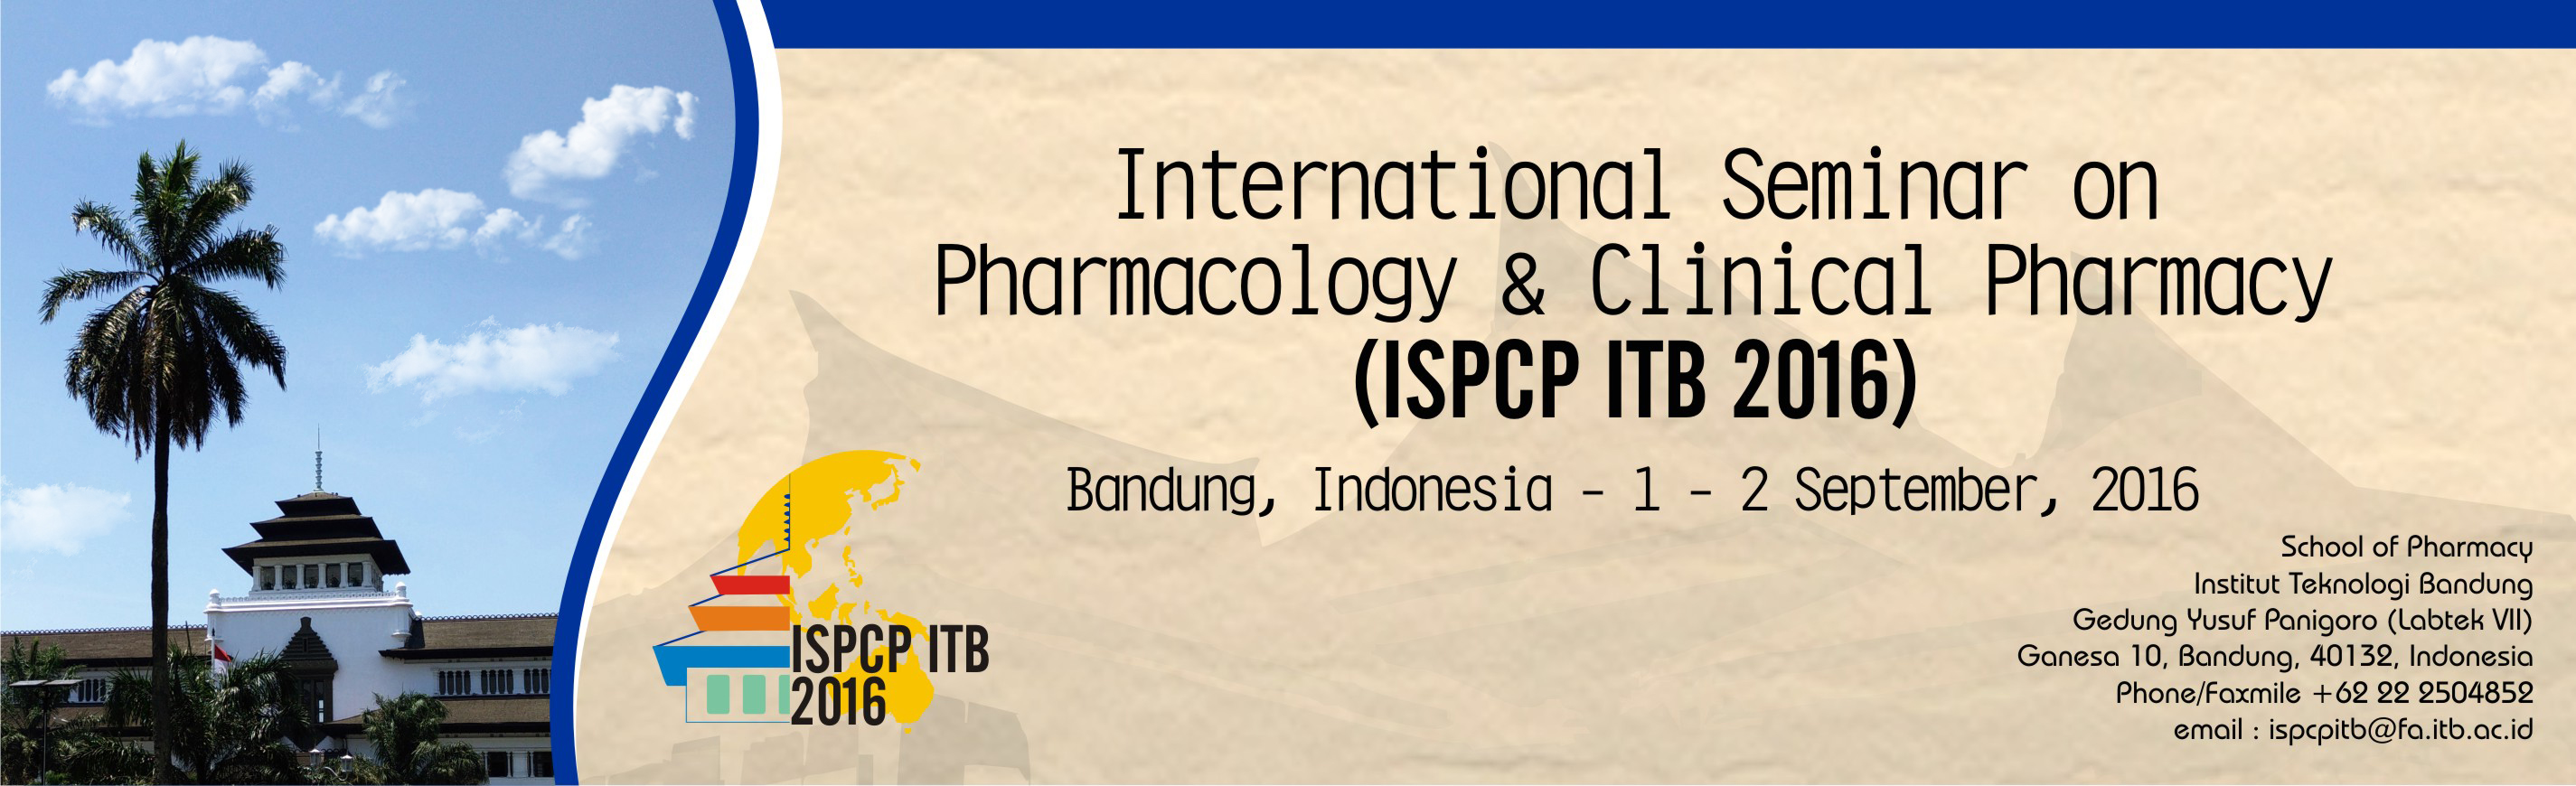 International Seminar on Pharmacology and Clinical Pharmacy